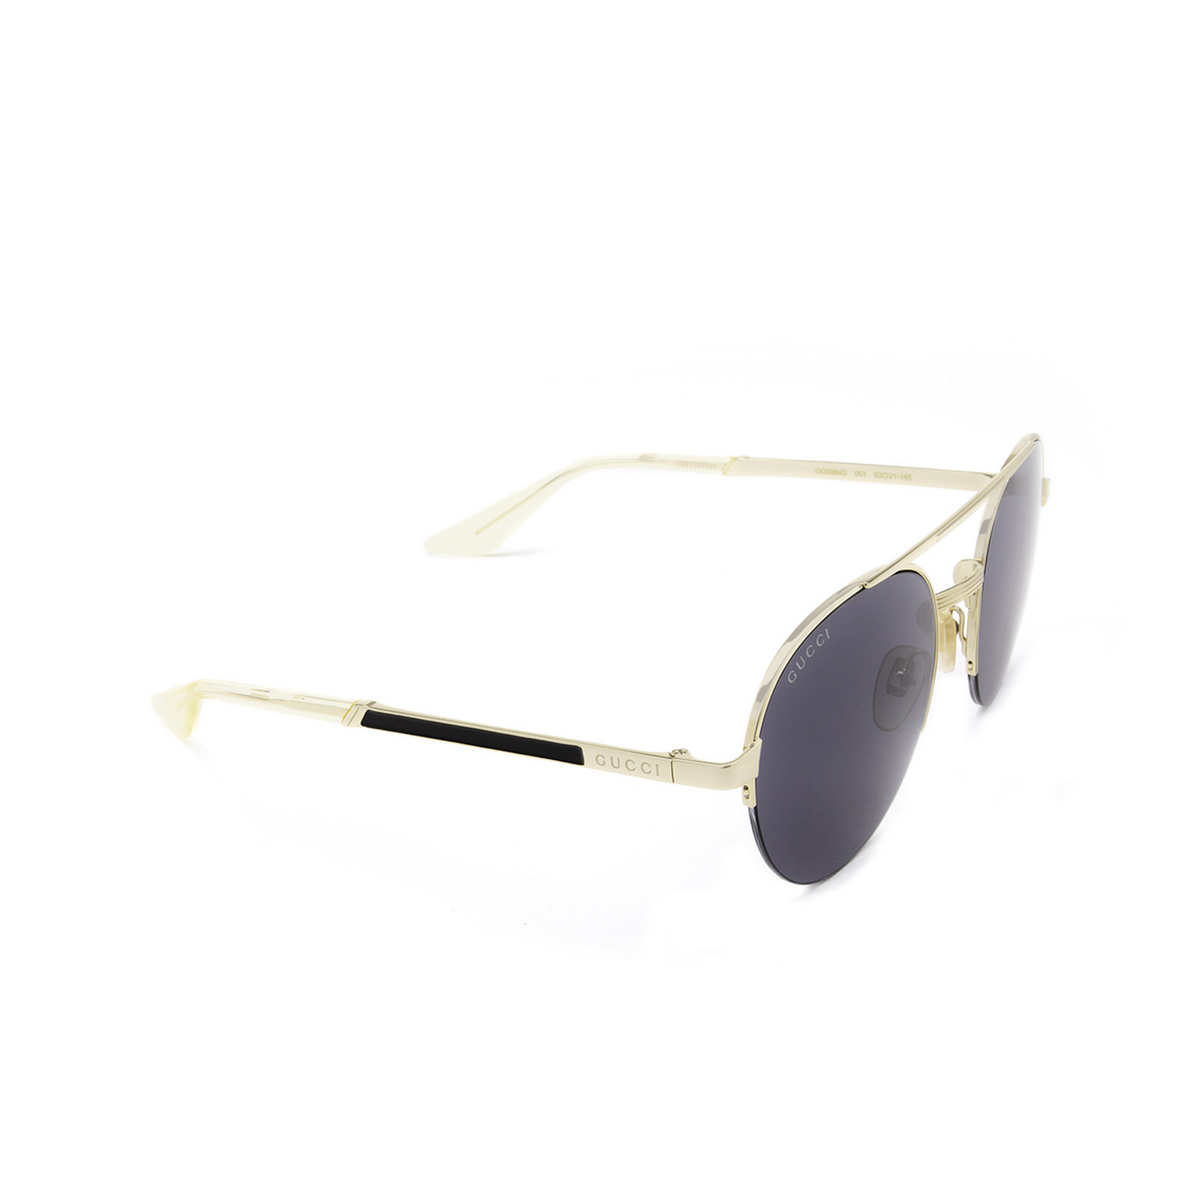 Gucci® Round Sunglasses: GG0984S color Gold 001 - three-quarters view.